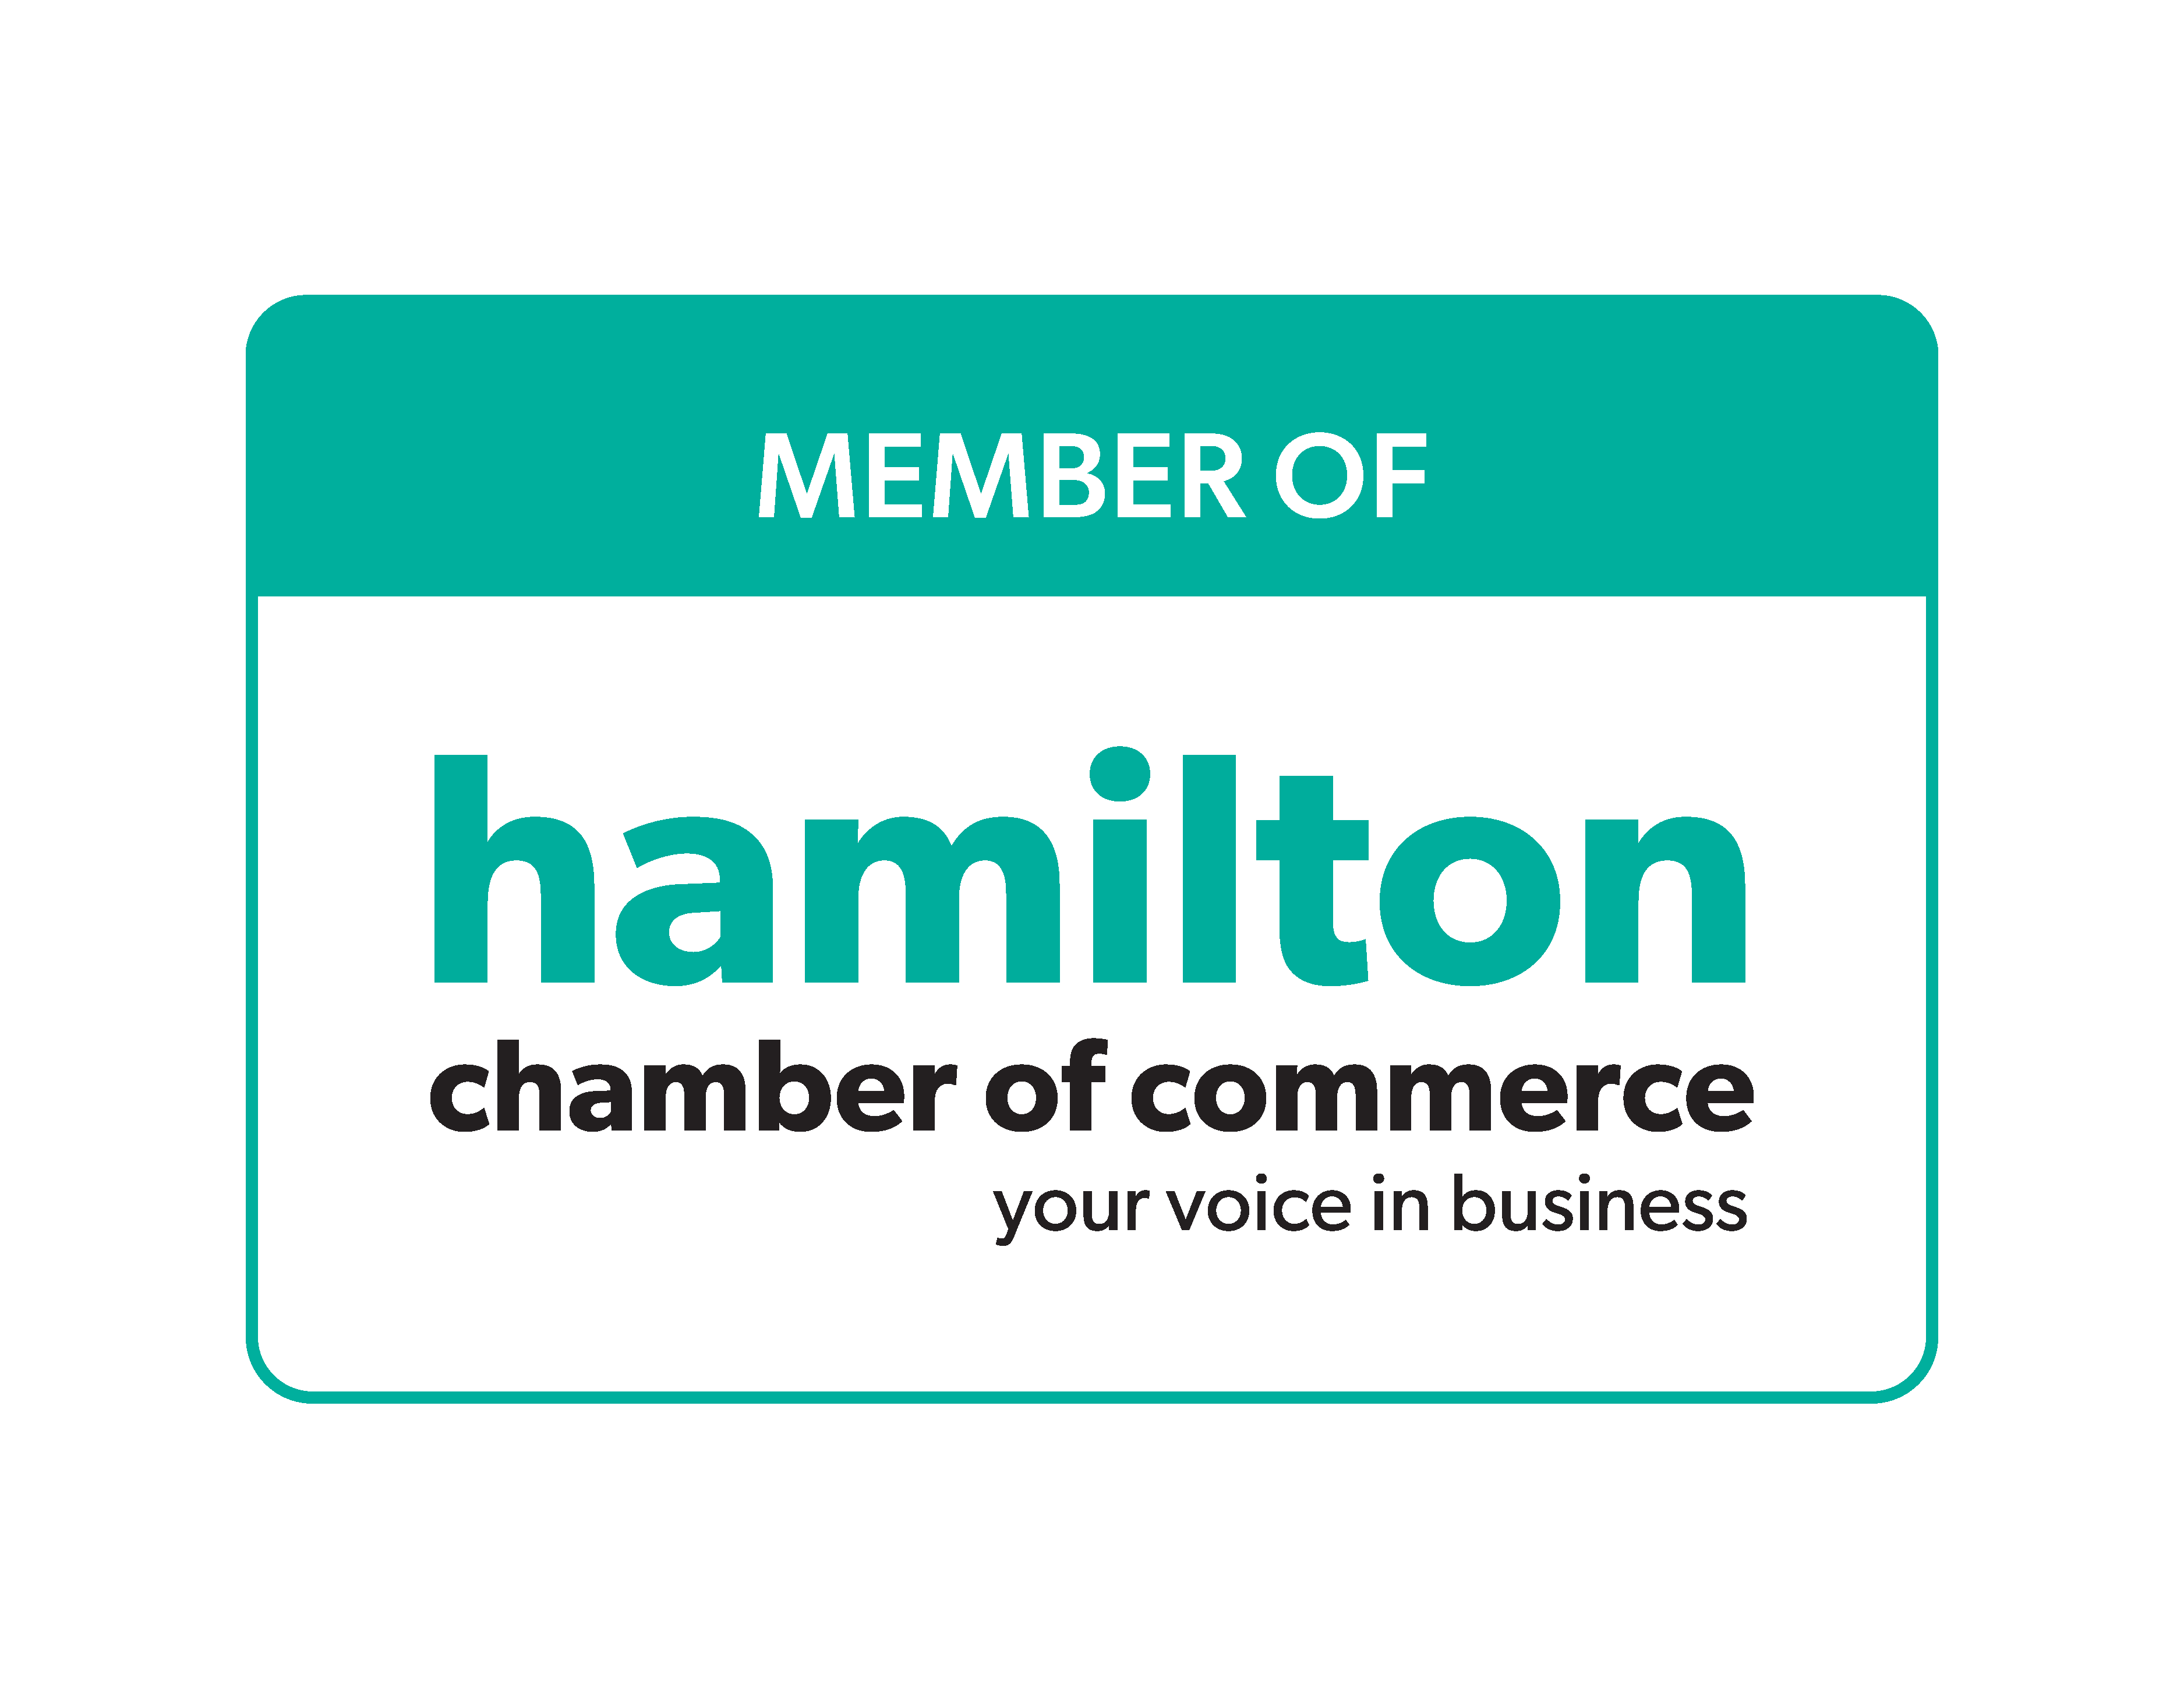 Next Day Access Hamilton franchise chamber of commerce member logo